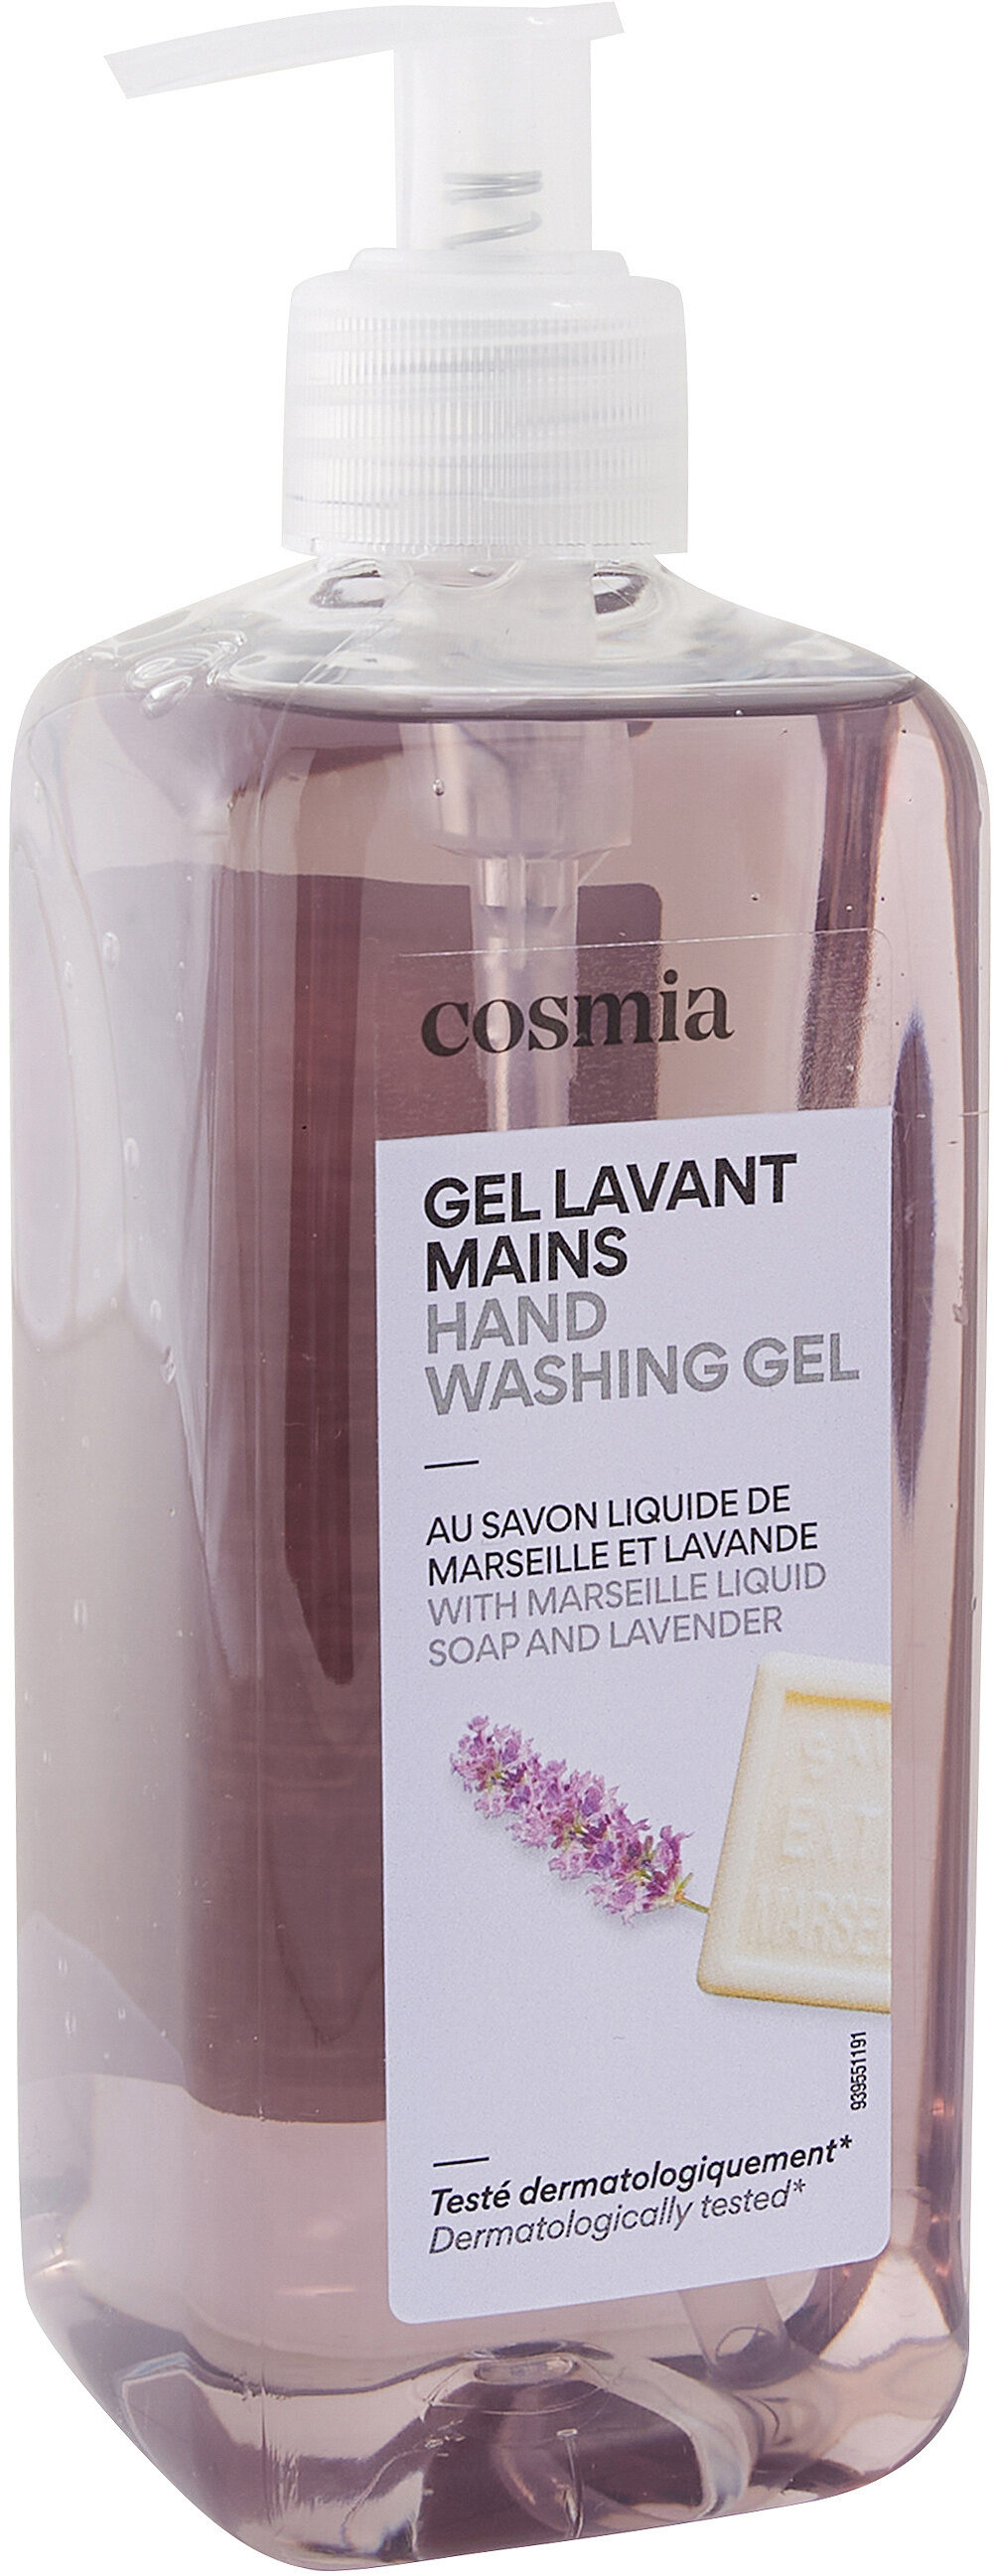 Cosmia savon main marseille et lavande 500 ml - Produit - fr